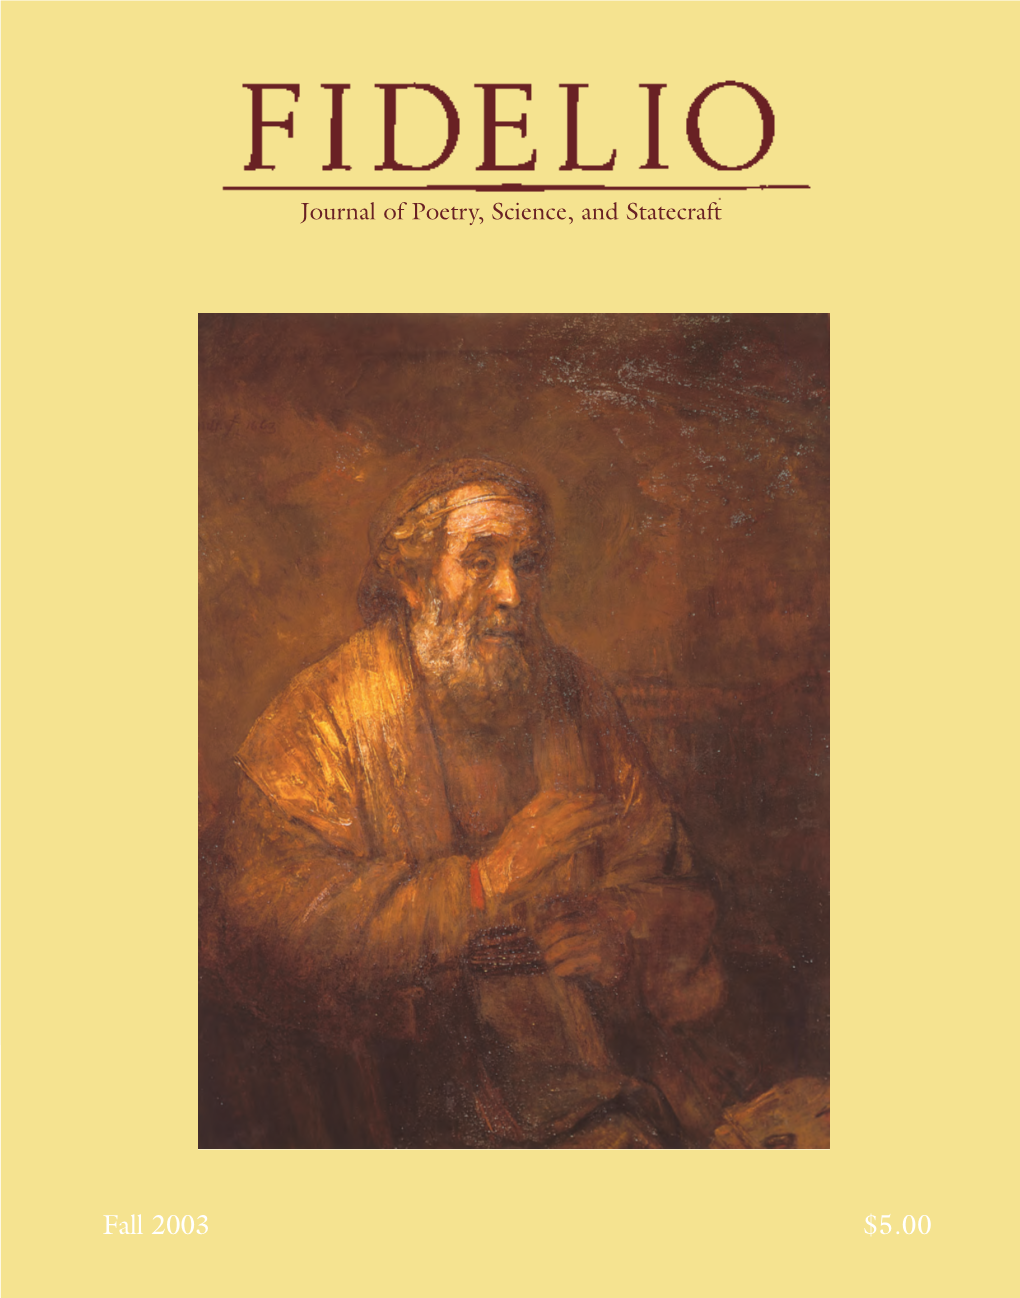 Fidelio, Volume 12, Number 3, Fall 2003